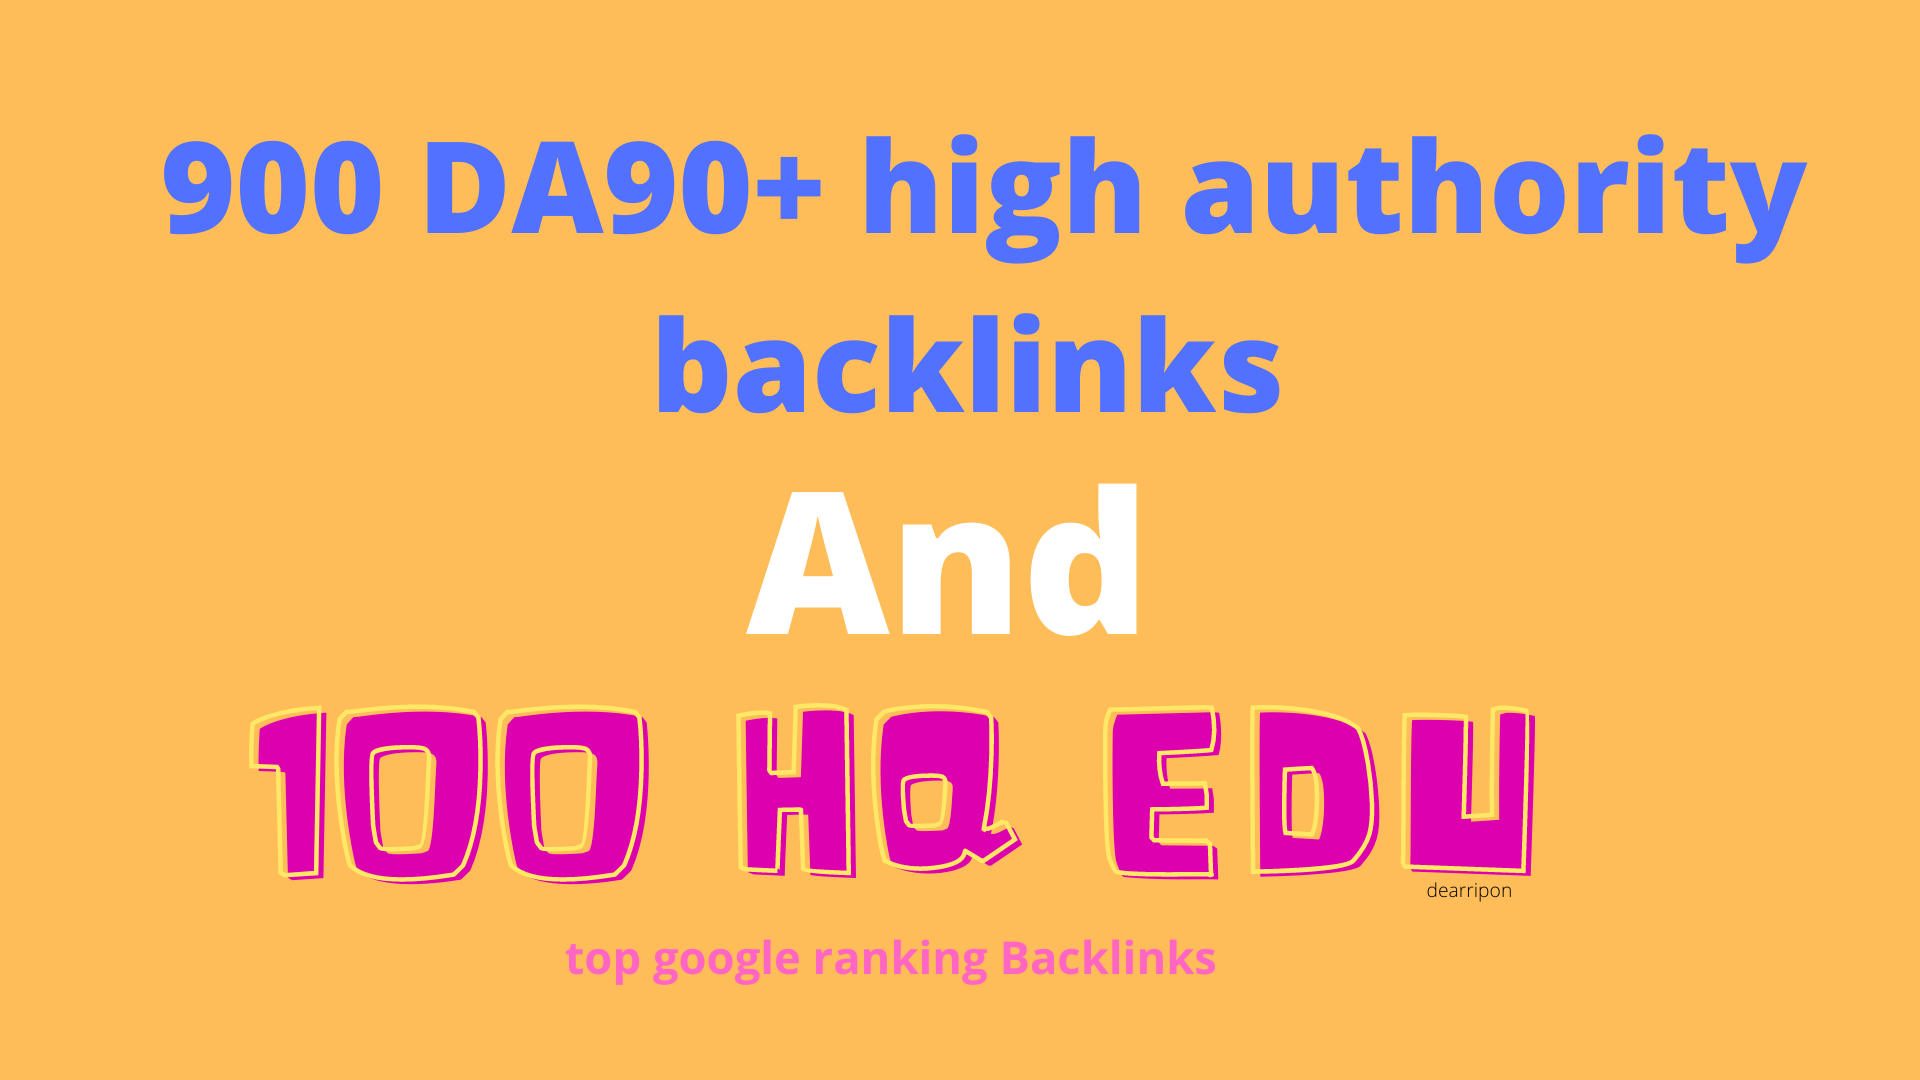 manually 900 DA40-100 and 100 Edu Gov exclusive Backlinks fast ranking